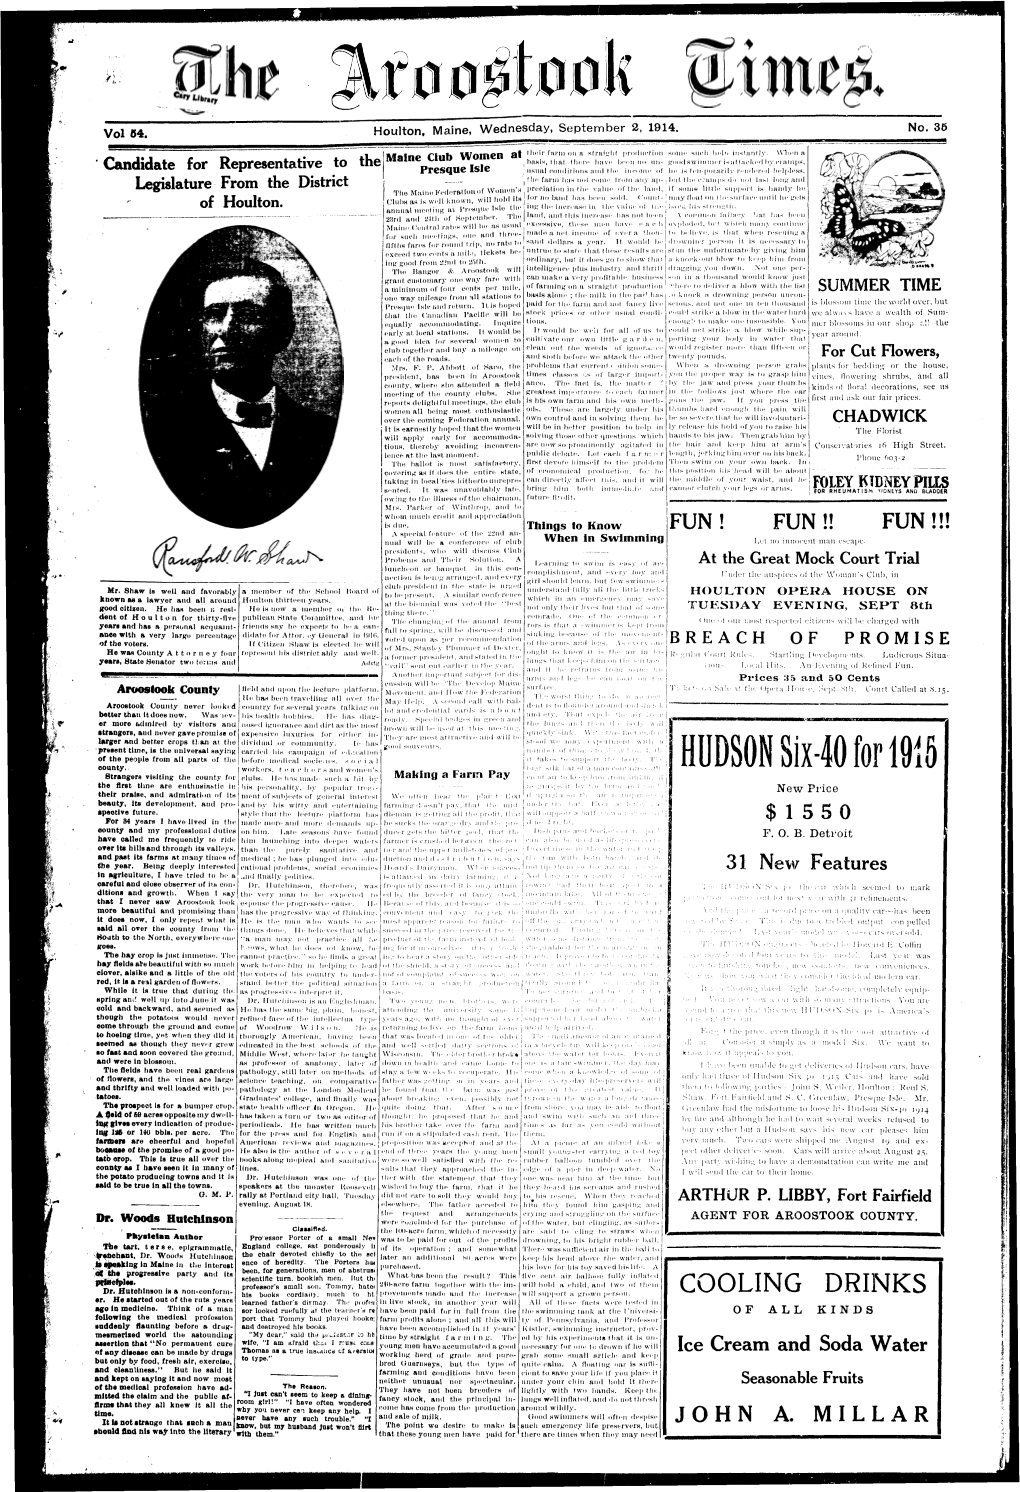 The Aroostook Times, September 2, 1914